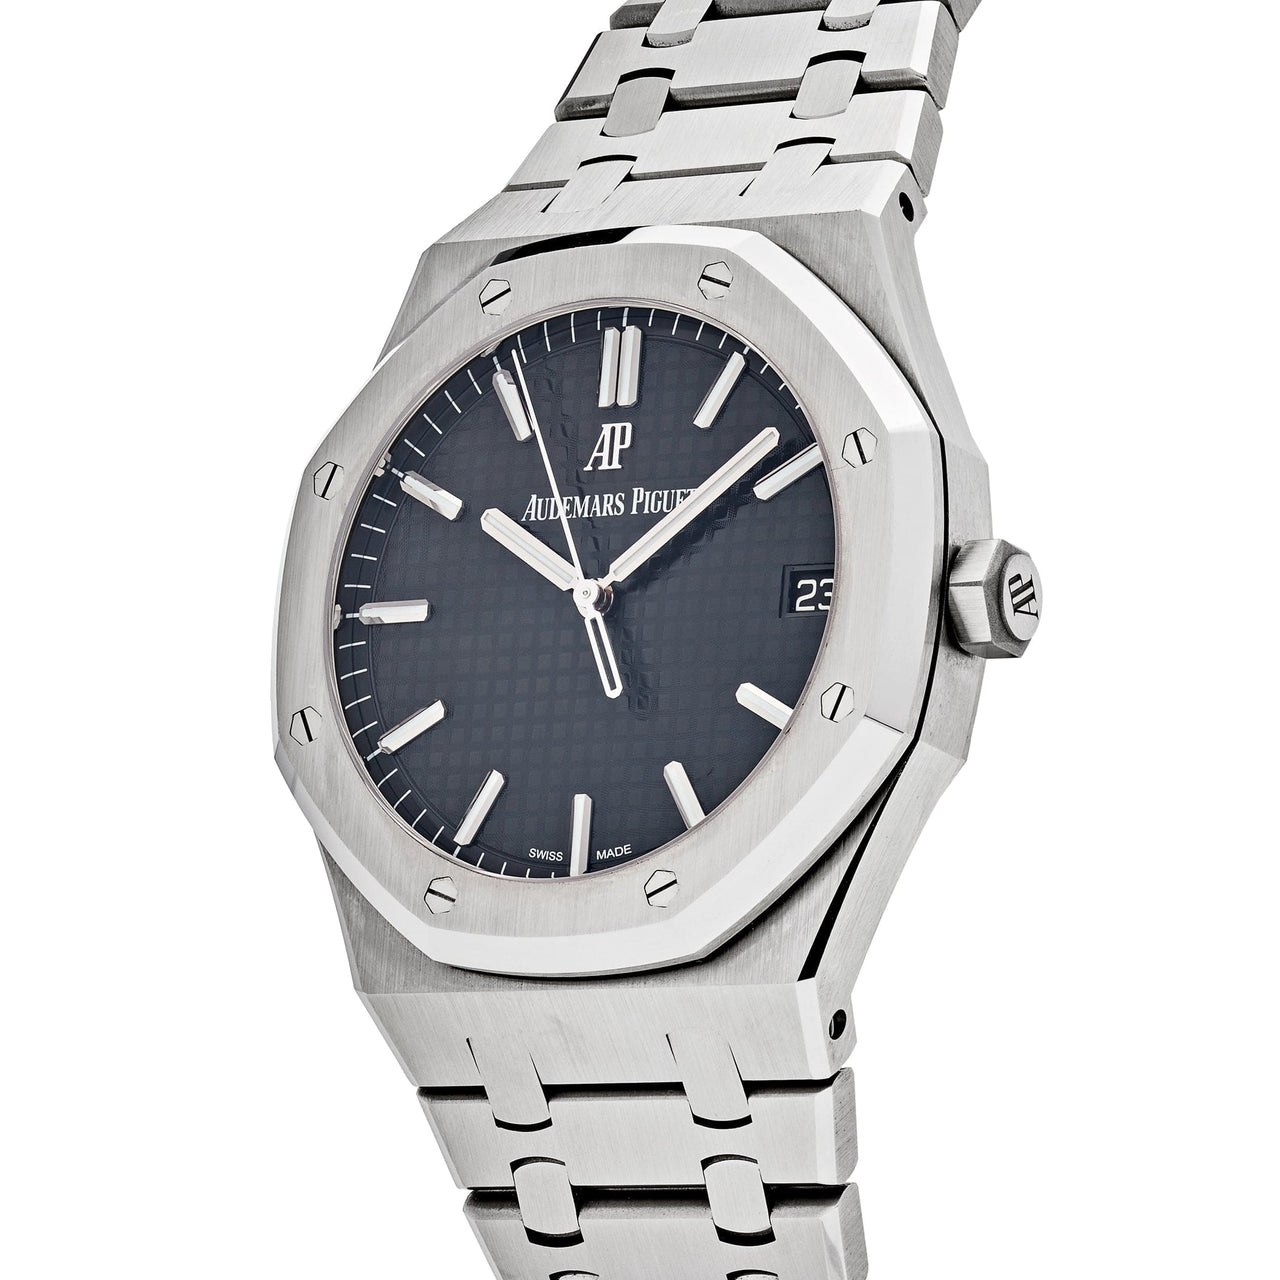 Luxury Watch Audemars Piguet Royal Oak Selfwinding Stainless Steel Black Dial 15500ST.OO.1220ST.03 Wrist Aficionado